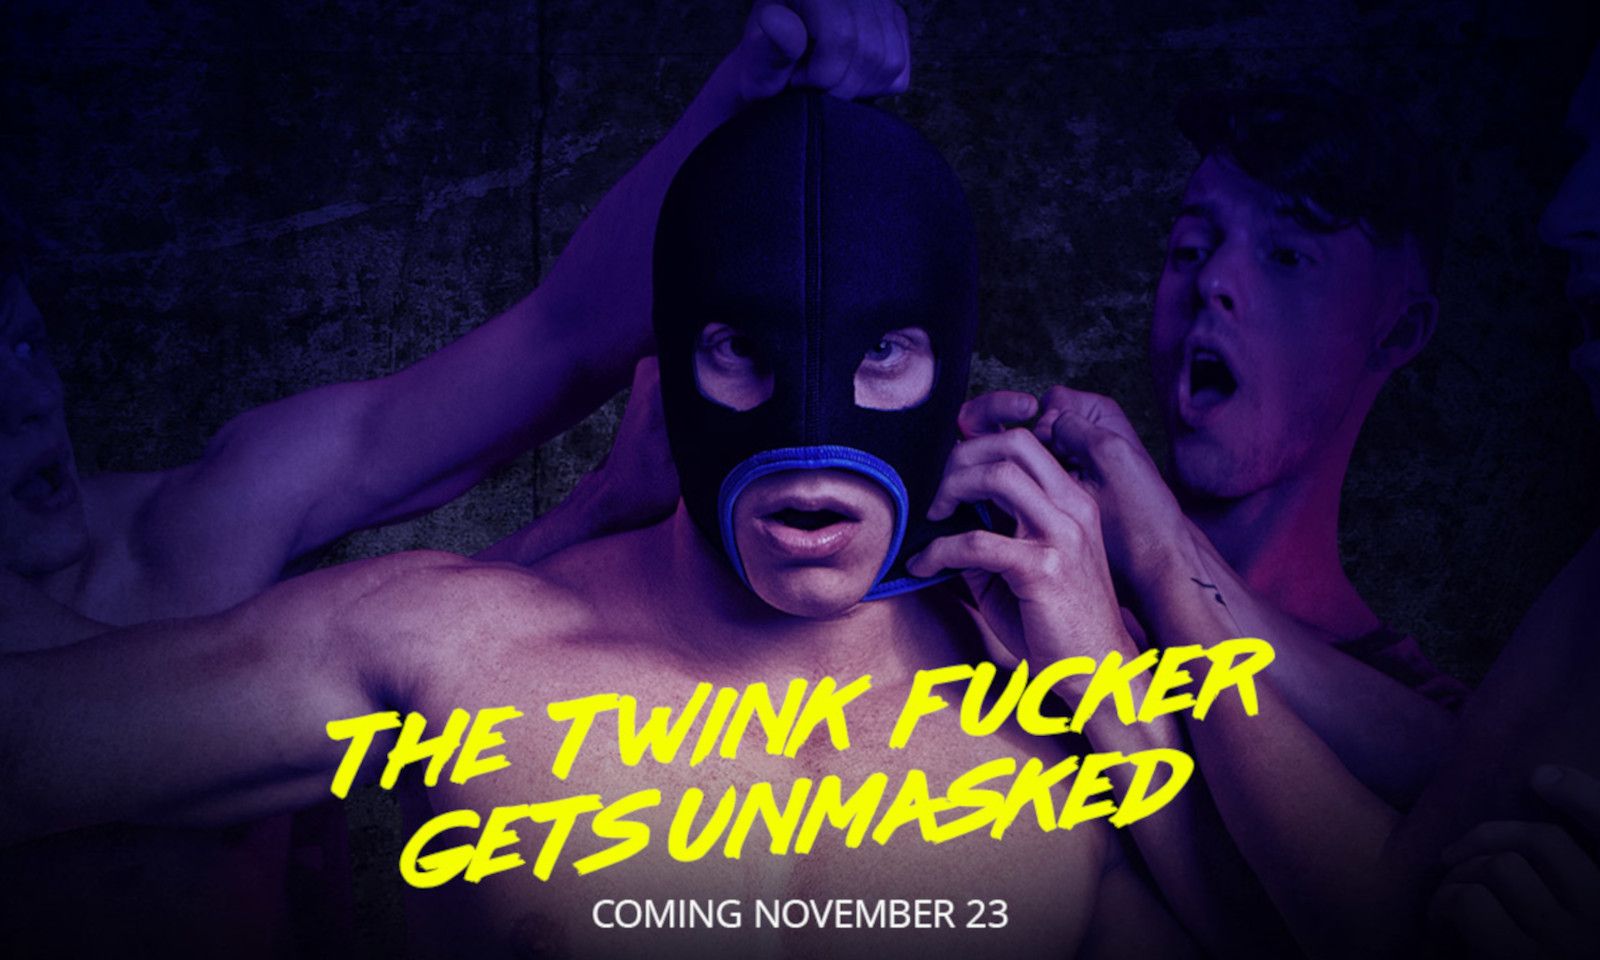 Men.com to Release the Finale of 'Twink Fucker'